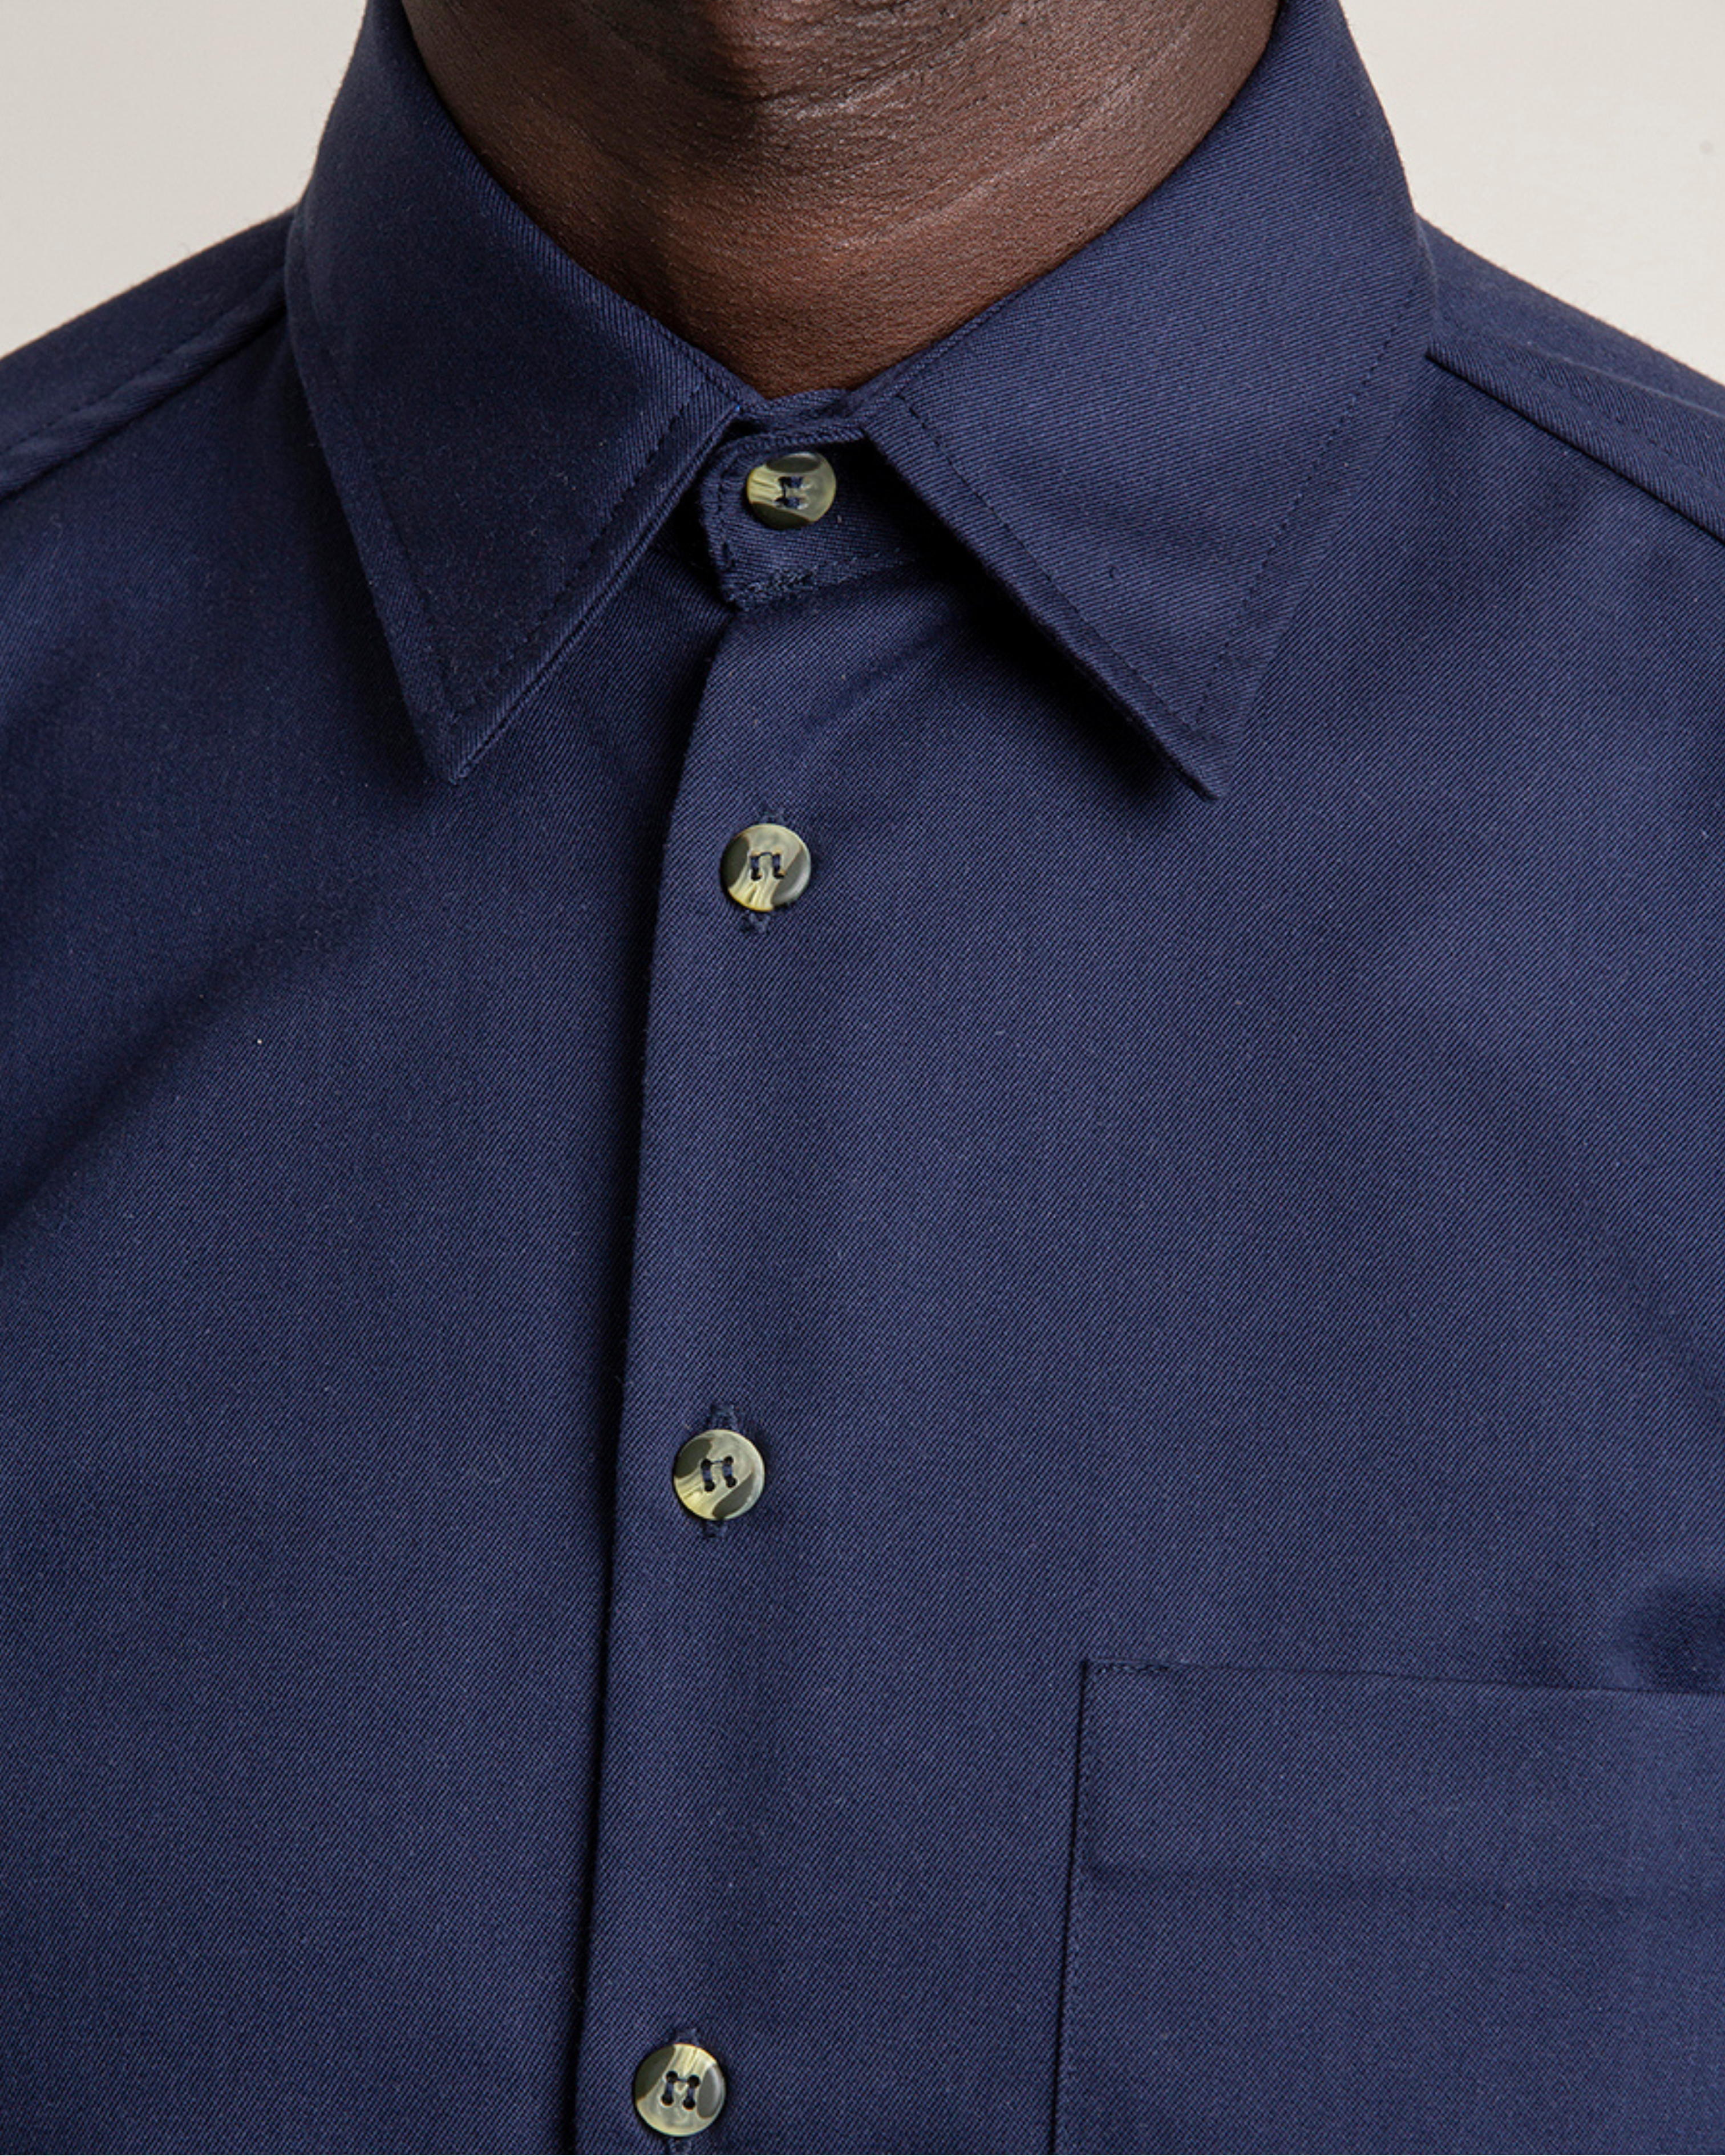 The 1 Pocket Cotton Shirt in Black Iris (Navy)